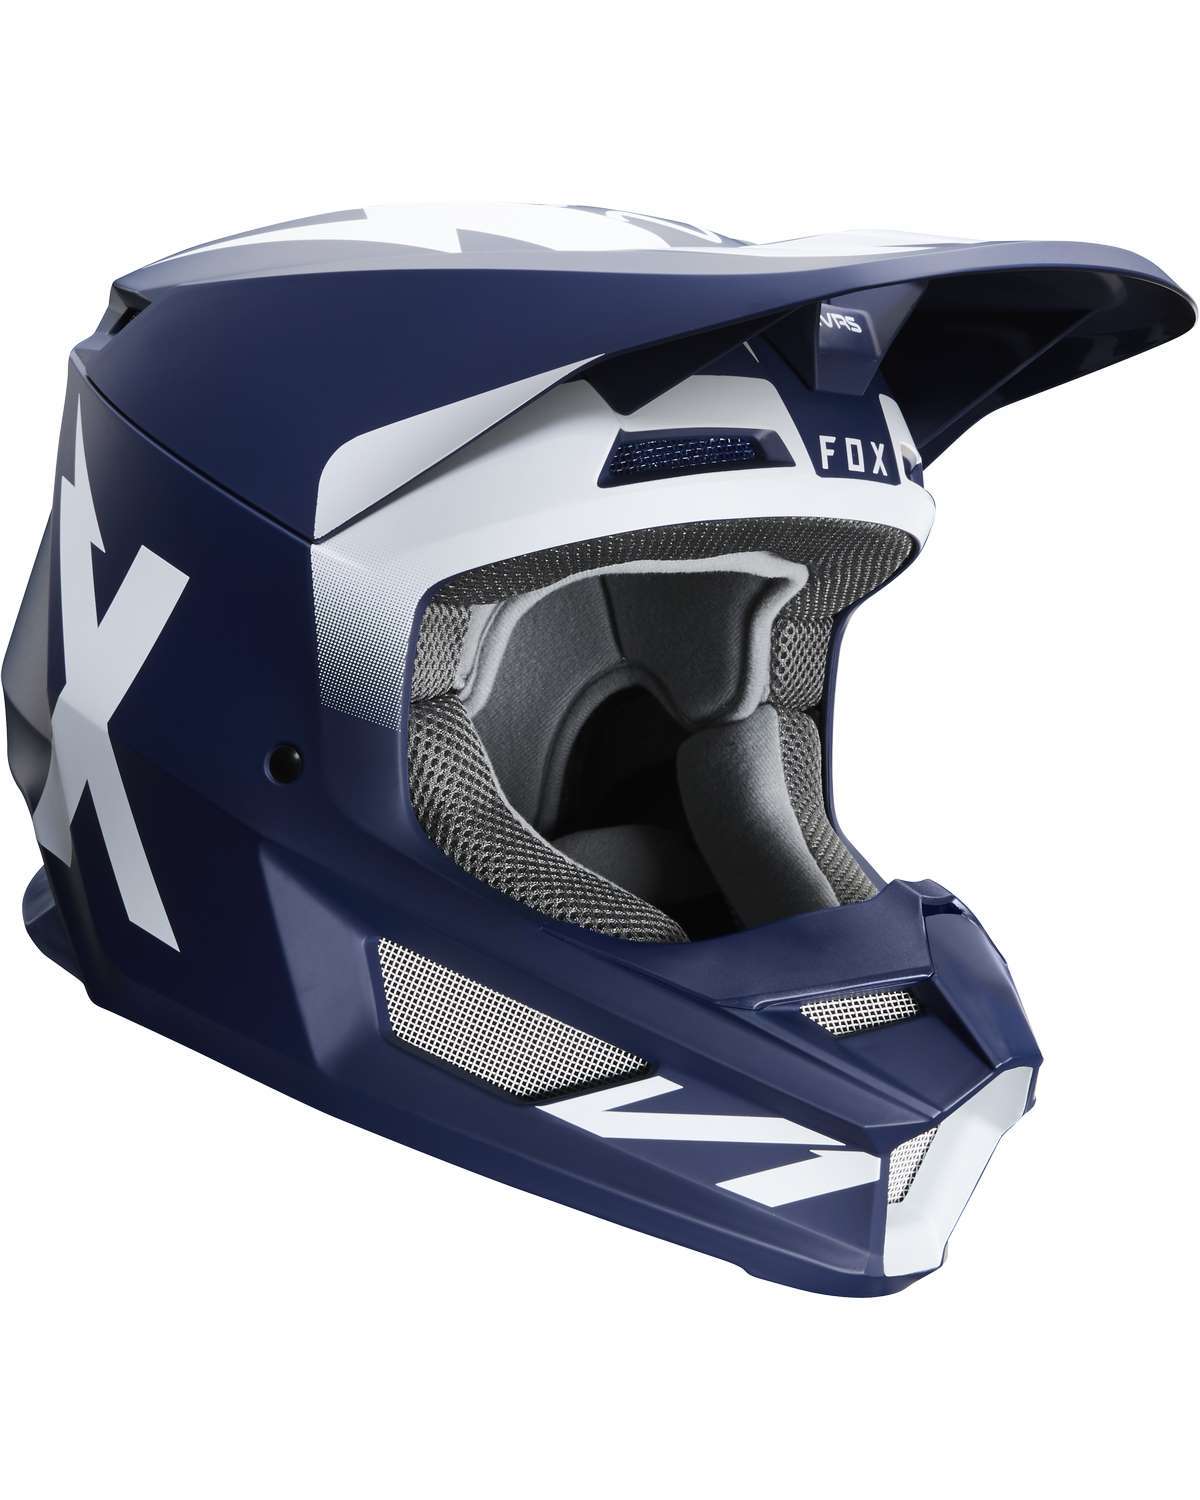 Premier casque de moto Predator Cross Enduro en fibre tricomposite FX108  bleu blanc Vente en Ligne 